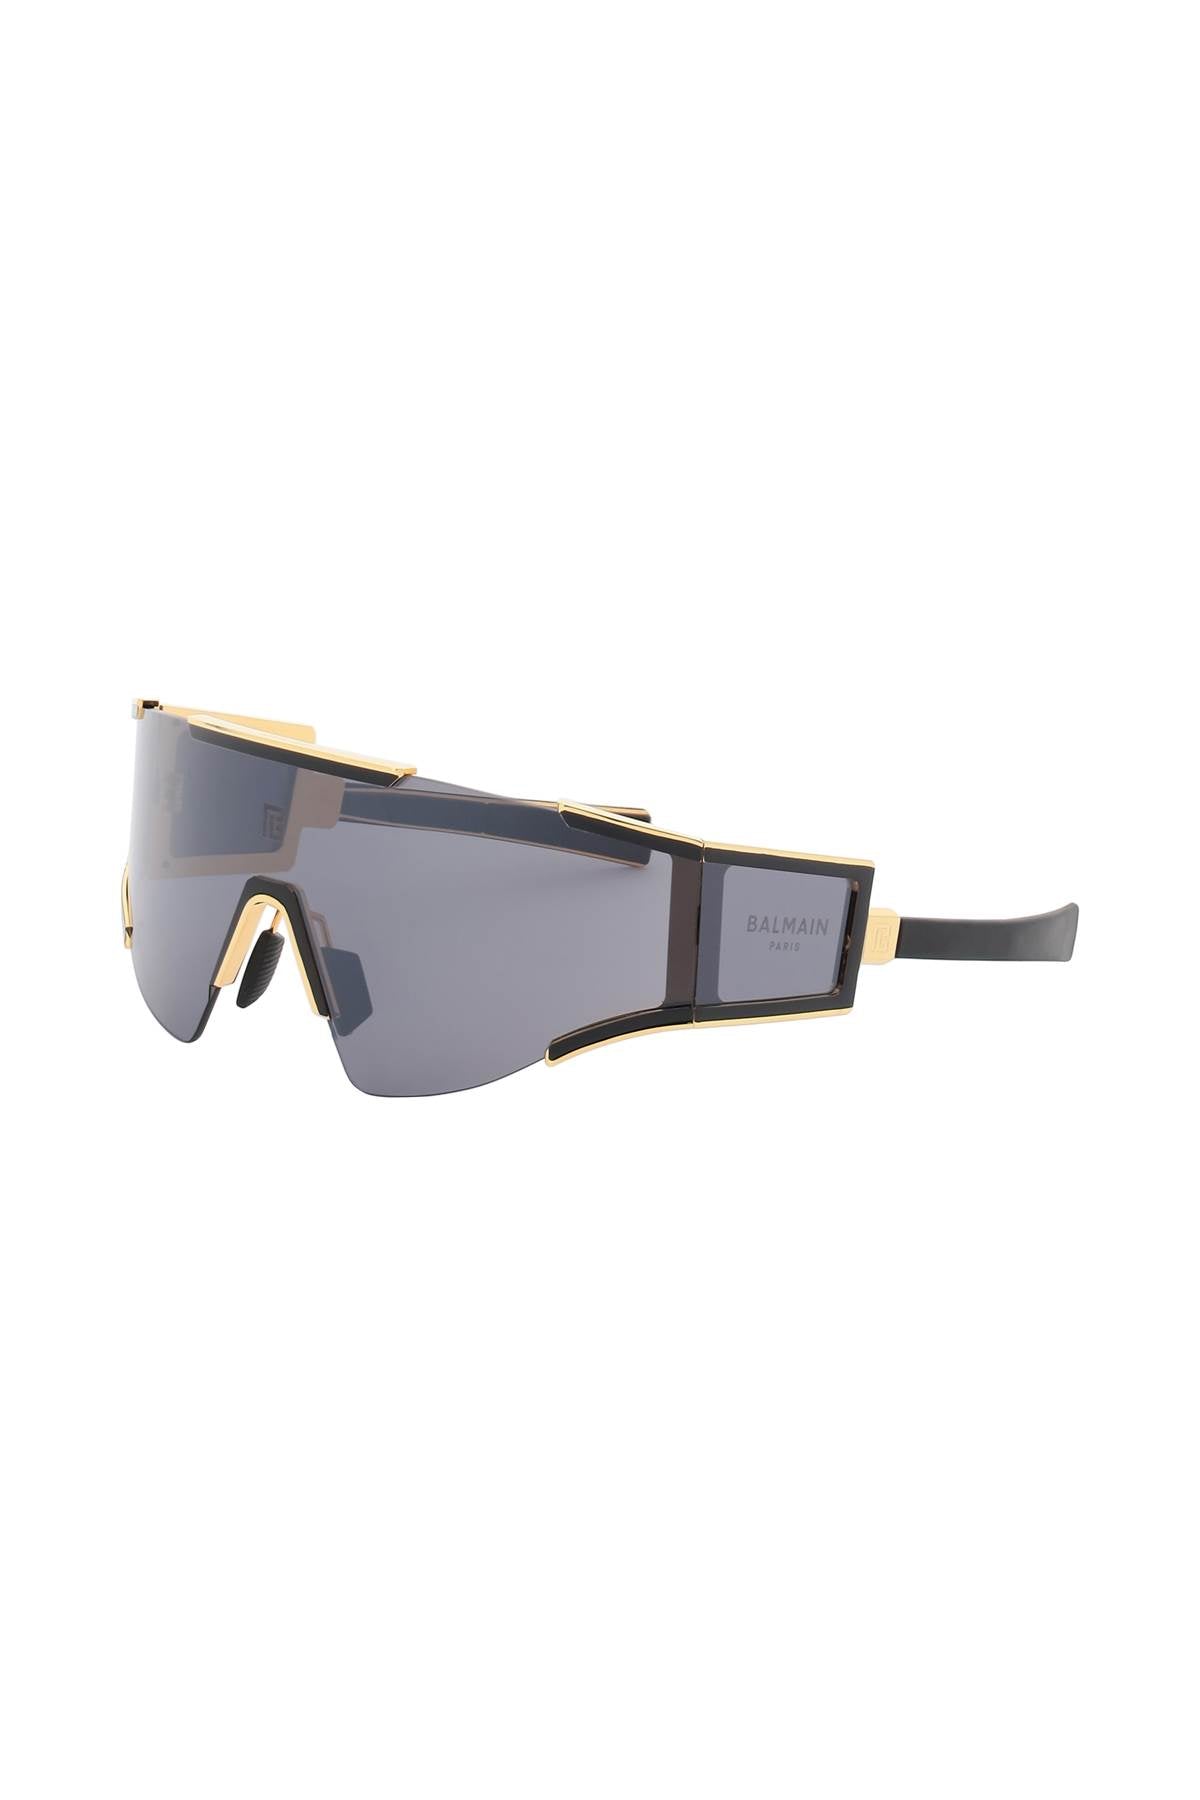 Balmain 'Fleche' Sunglasses-Balmain-Urbanheer